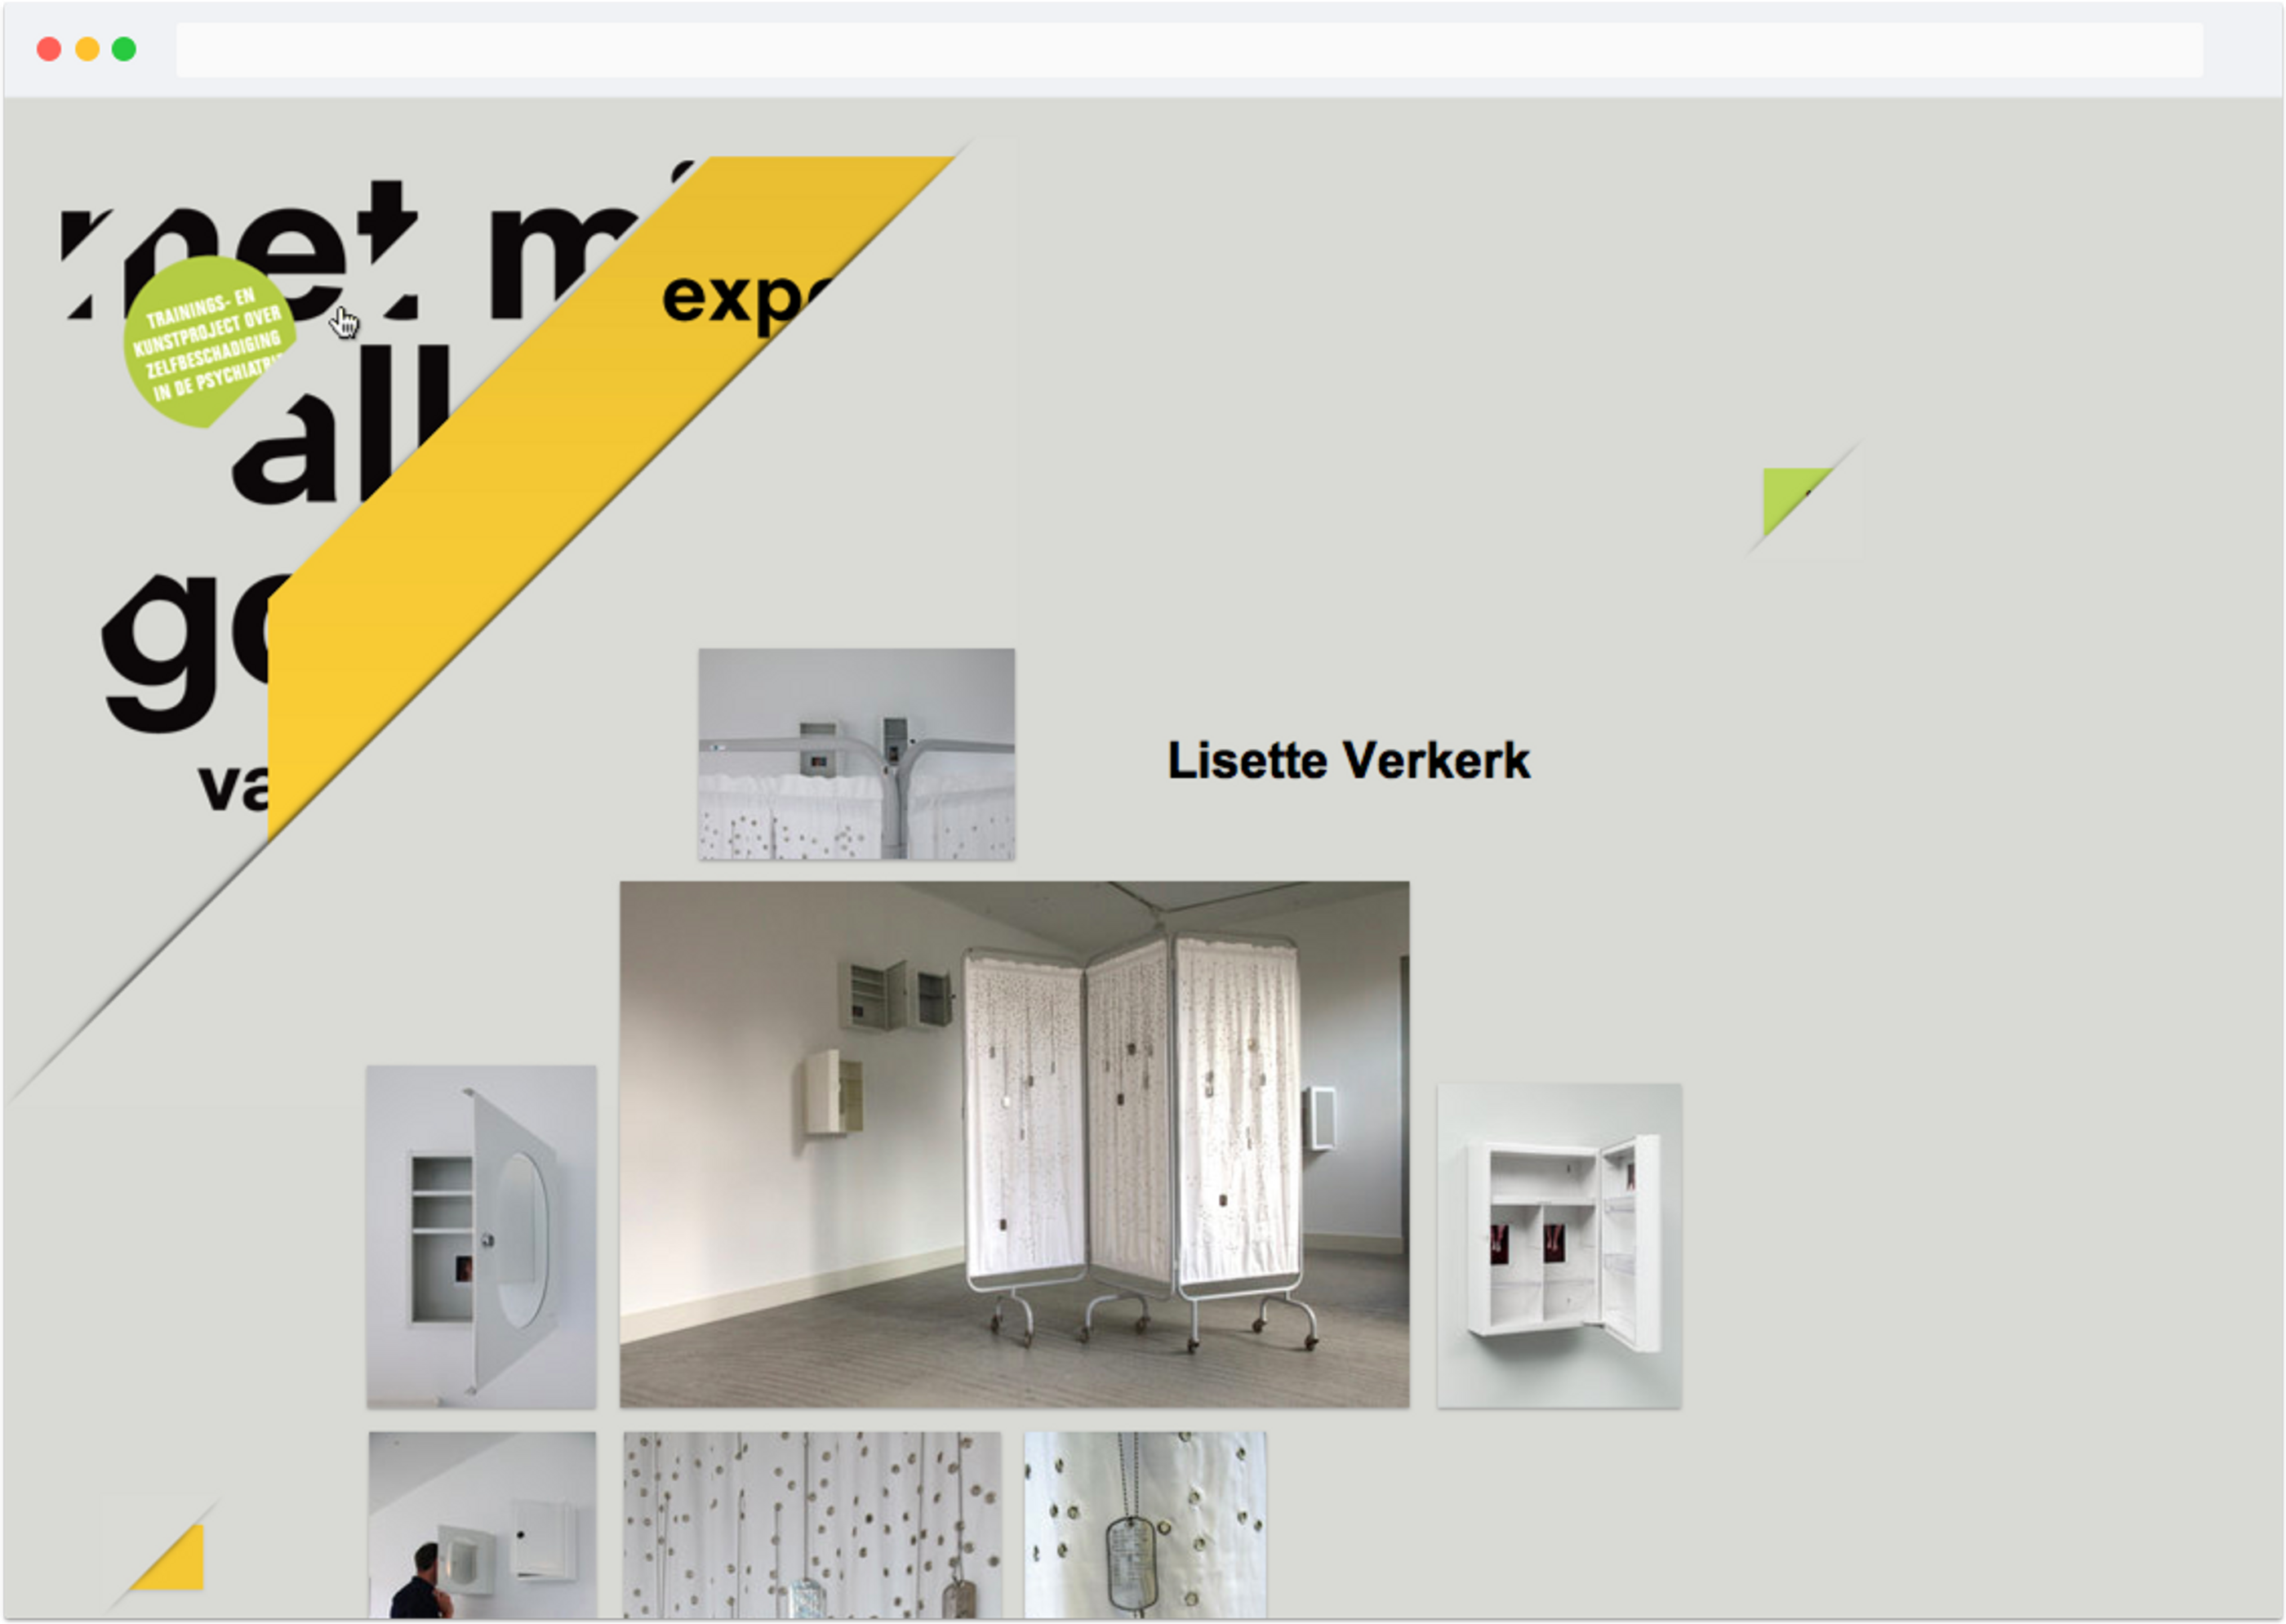 Design and development for “Met mij alles goed” website in collaboration with René Put.